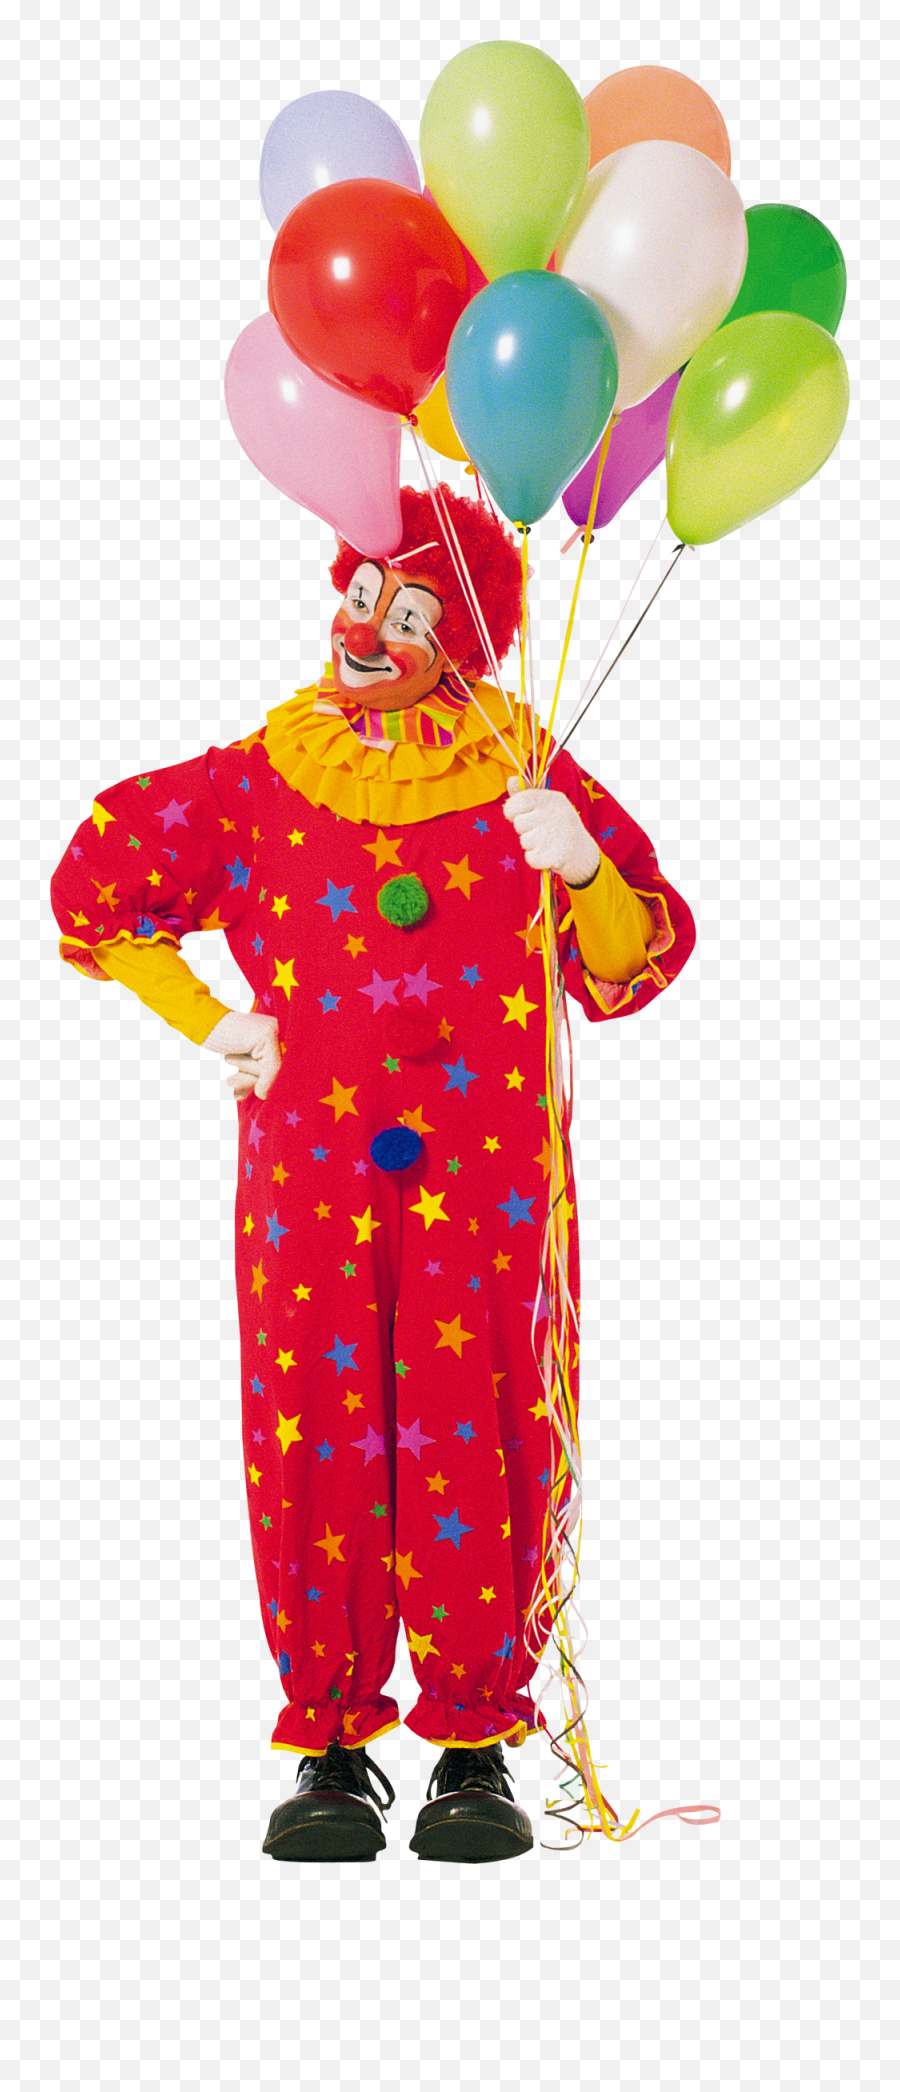 Clown Png Image Hd Real Wig